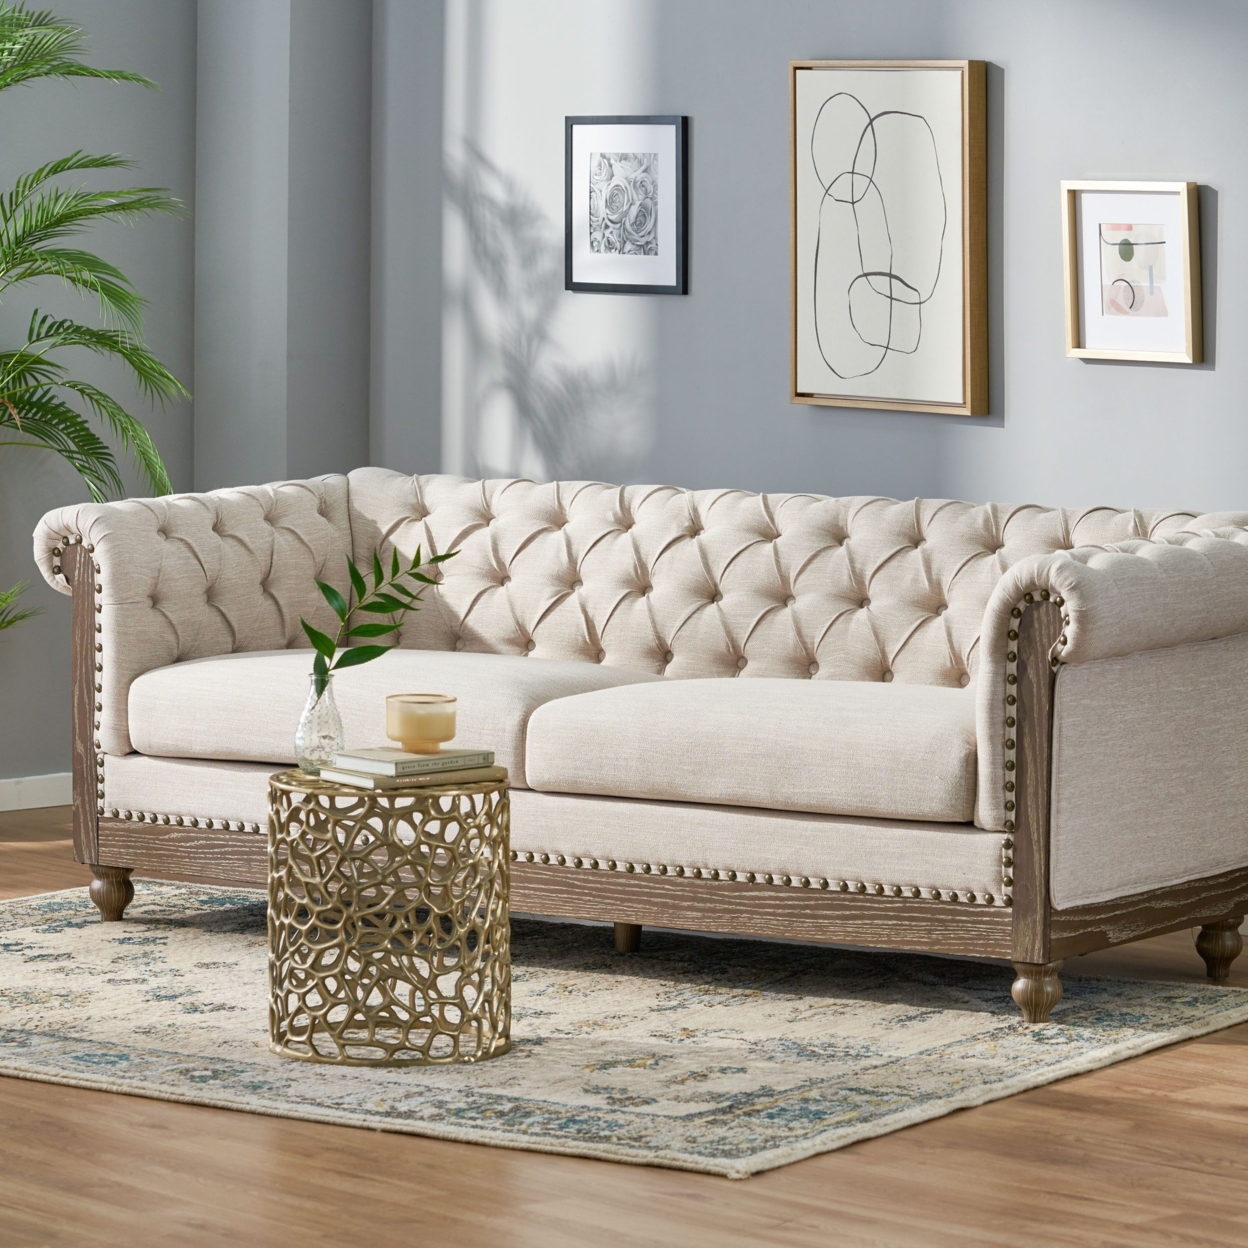 Kinzie Chesterfield Tufted Fabric 3 Seater Sofa With Nailhead Trim - Dark Brown/beige